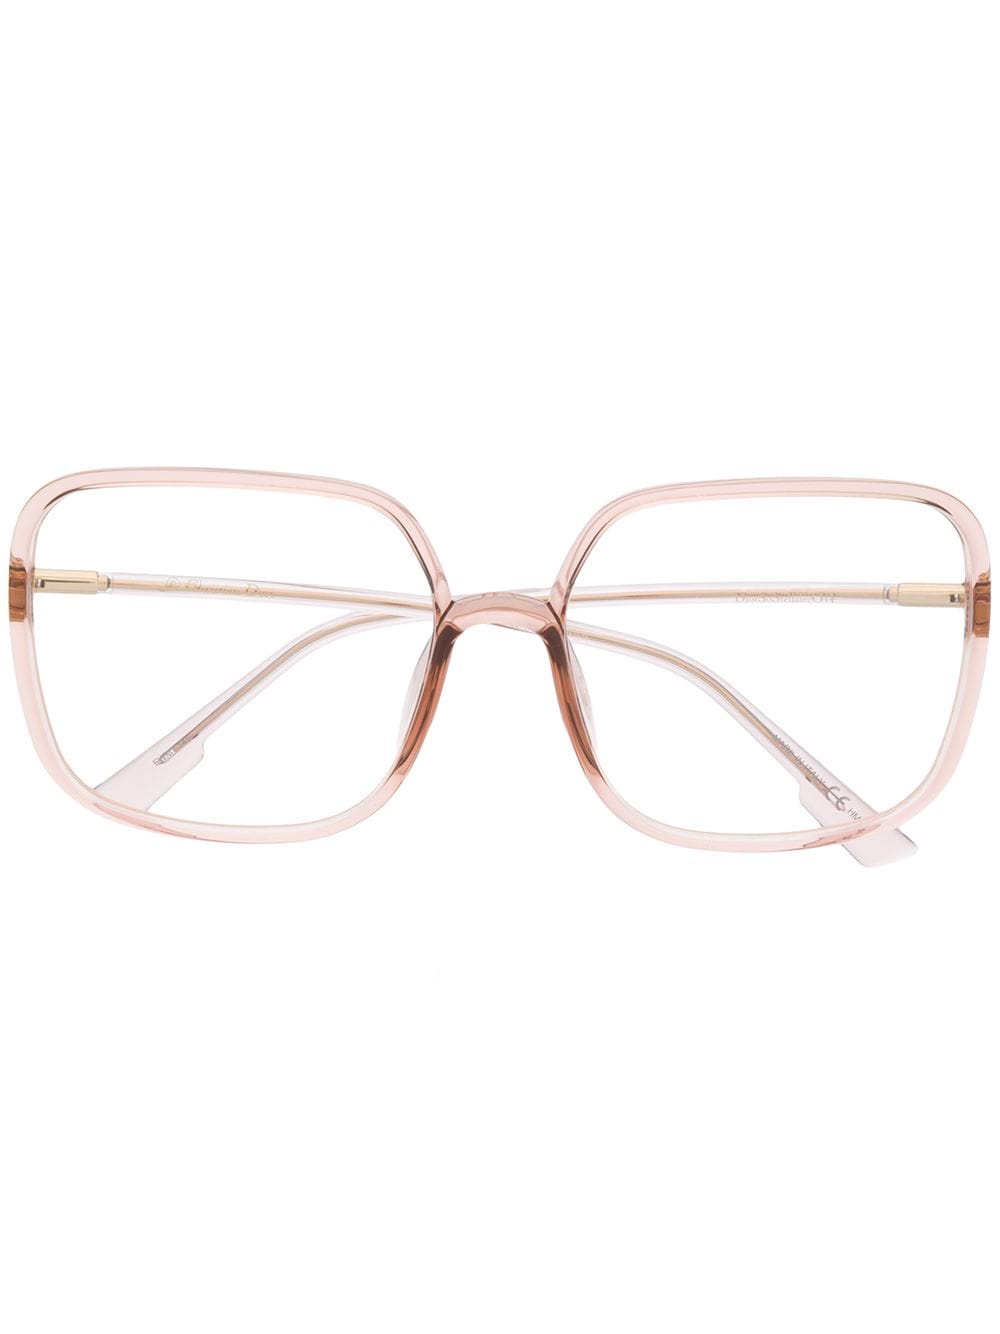 фото Dior eyewear очки so stellaire в квадратной оправе